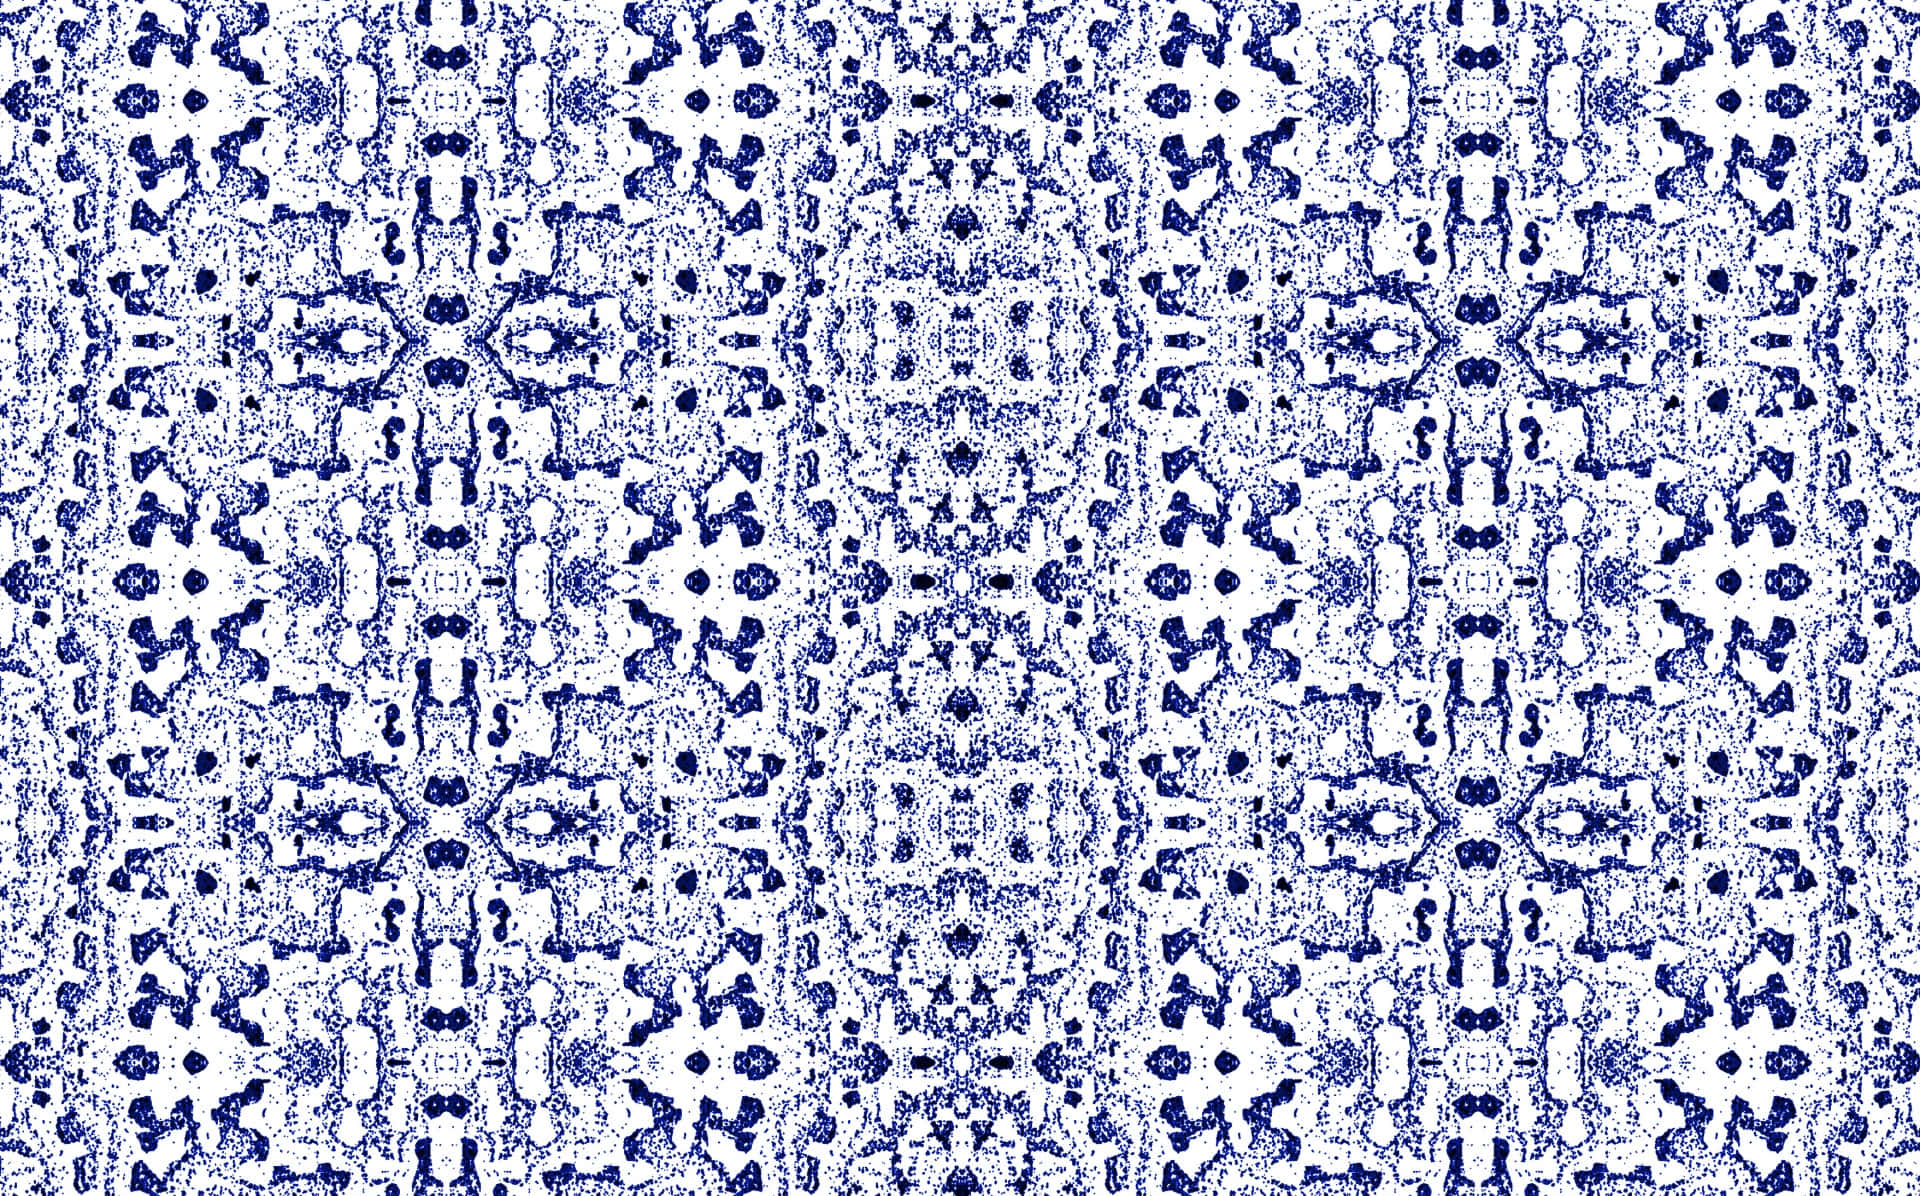 Intricate Blue Patterns [wallpaper] Wallpaper